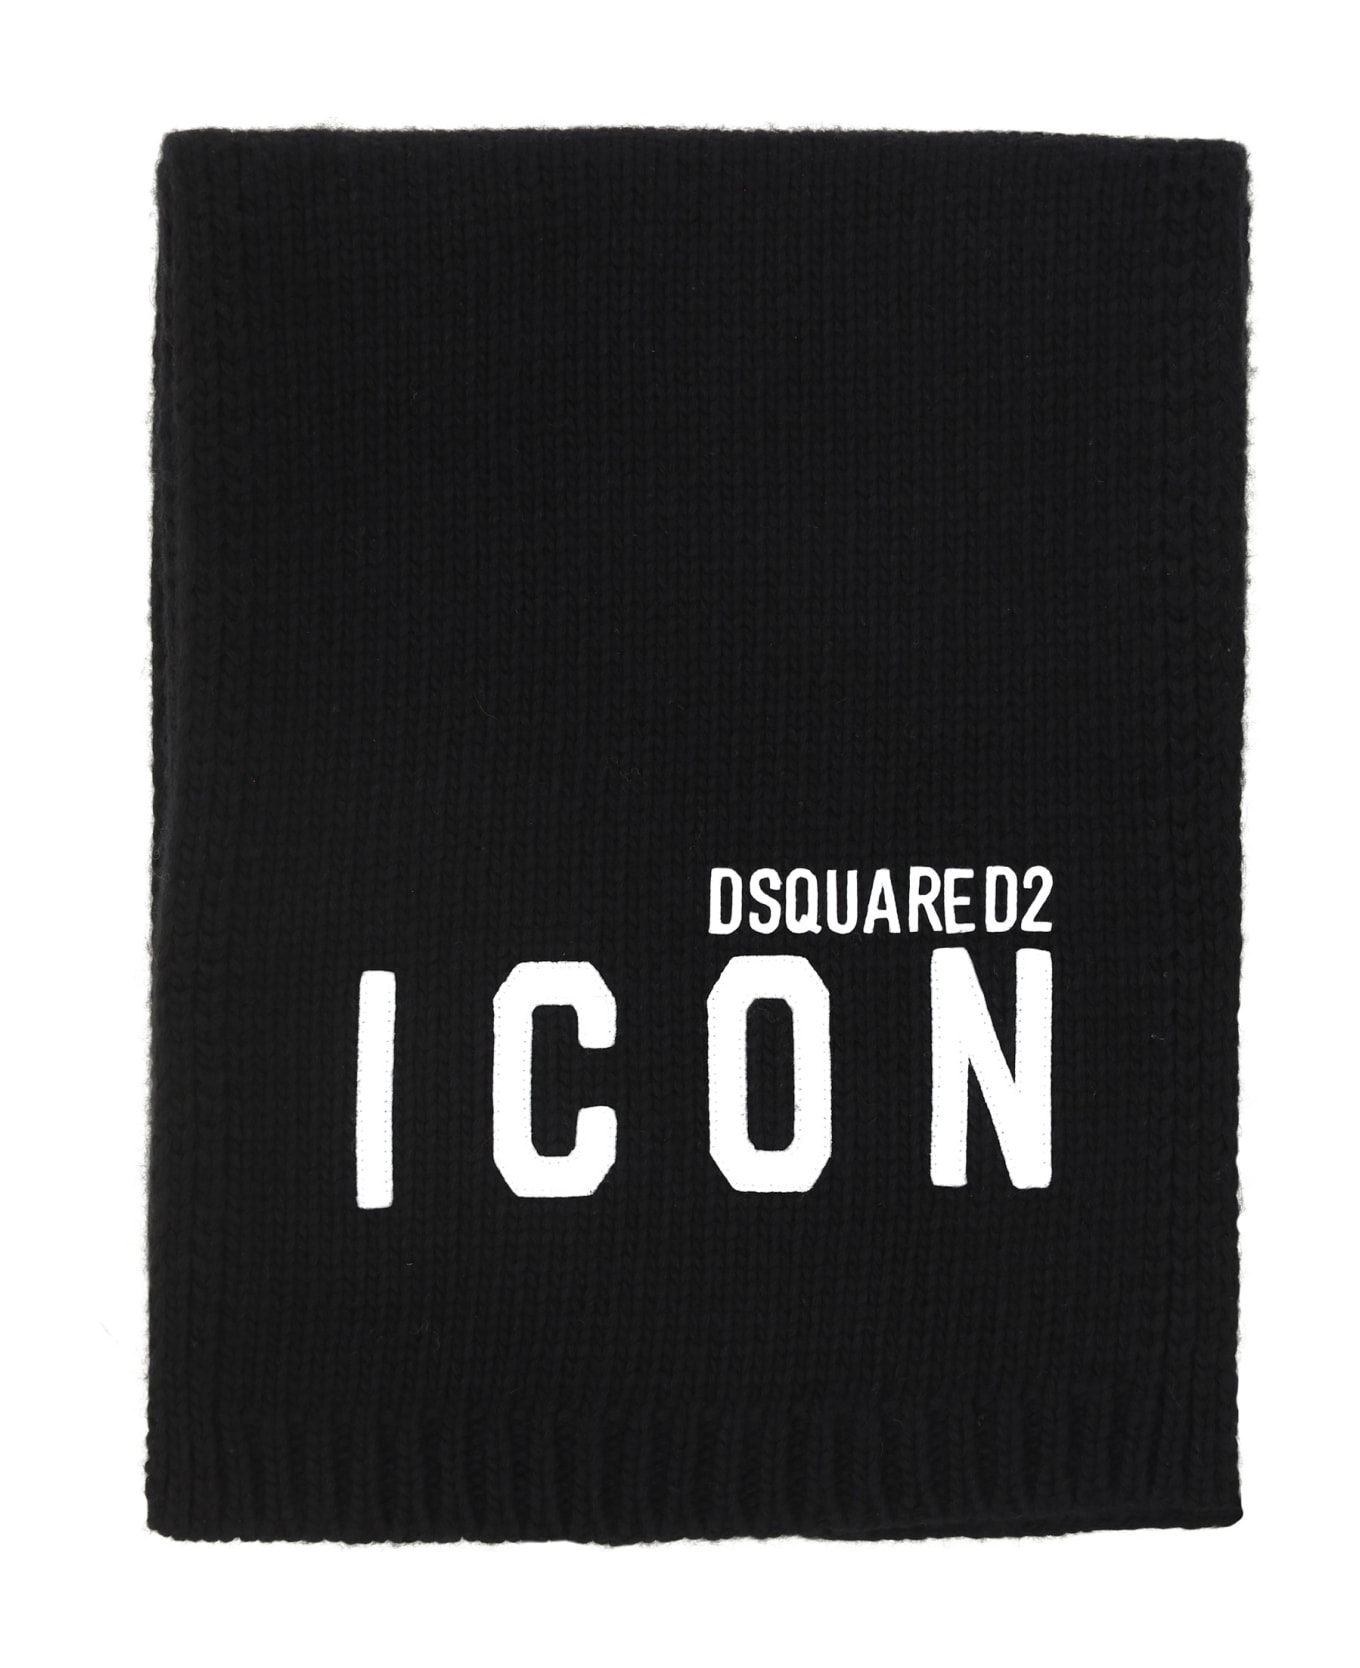 Dsquared2 Black Wool Blend Scarf - M063 スカーフ